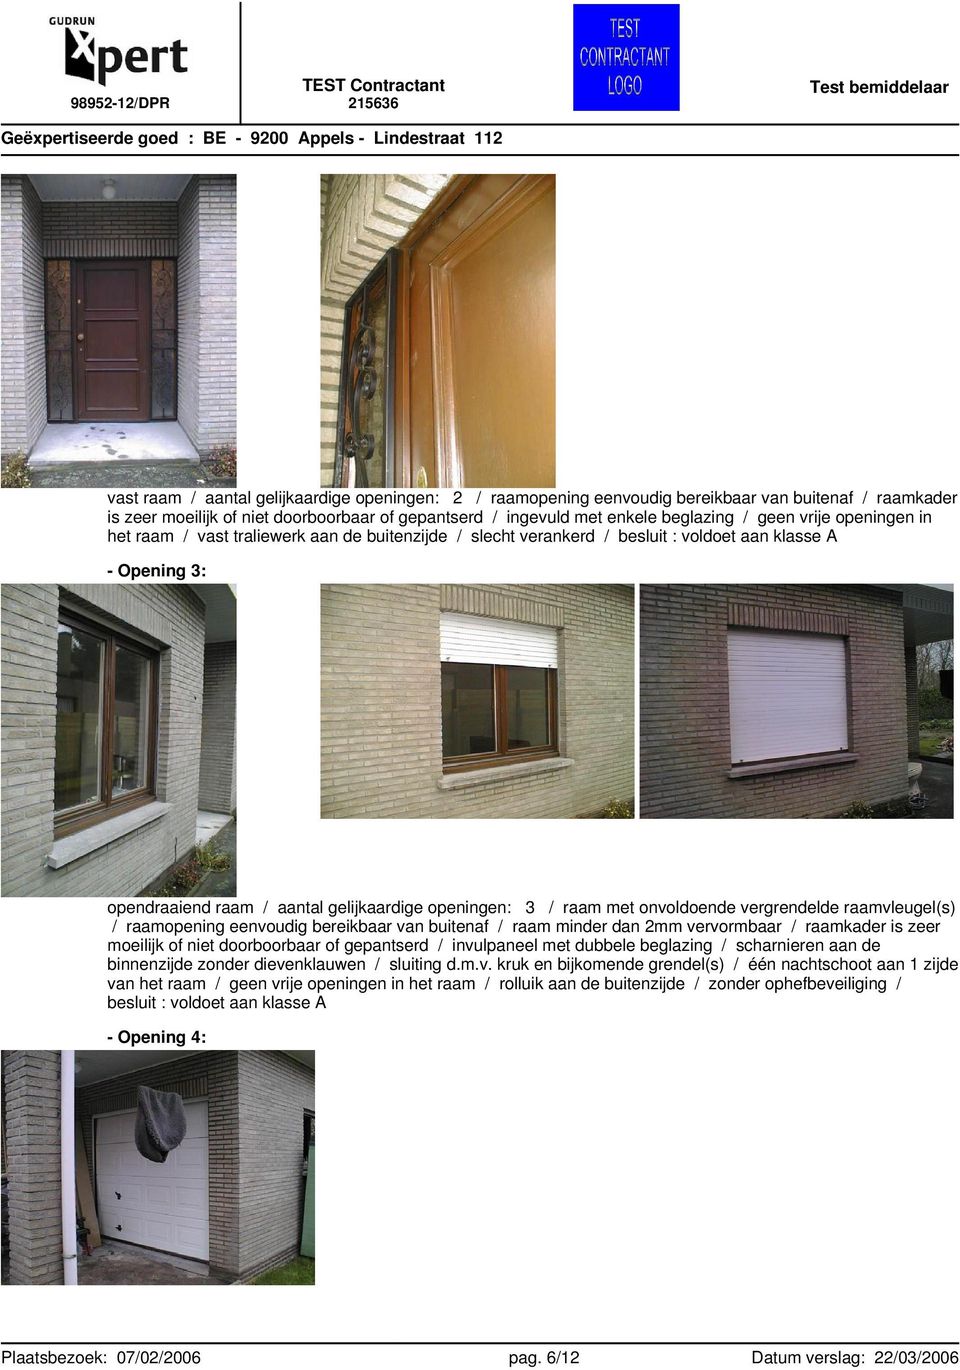 3: opendraaiend raam / aantal gelijkaardige openingen: 3 / raam met onvoldoende vergrendelde raamvleugel(s) / raamopening eenvoudig bereikbaar van buitenaf / raam minder dan 2mm vervormbaar /